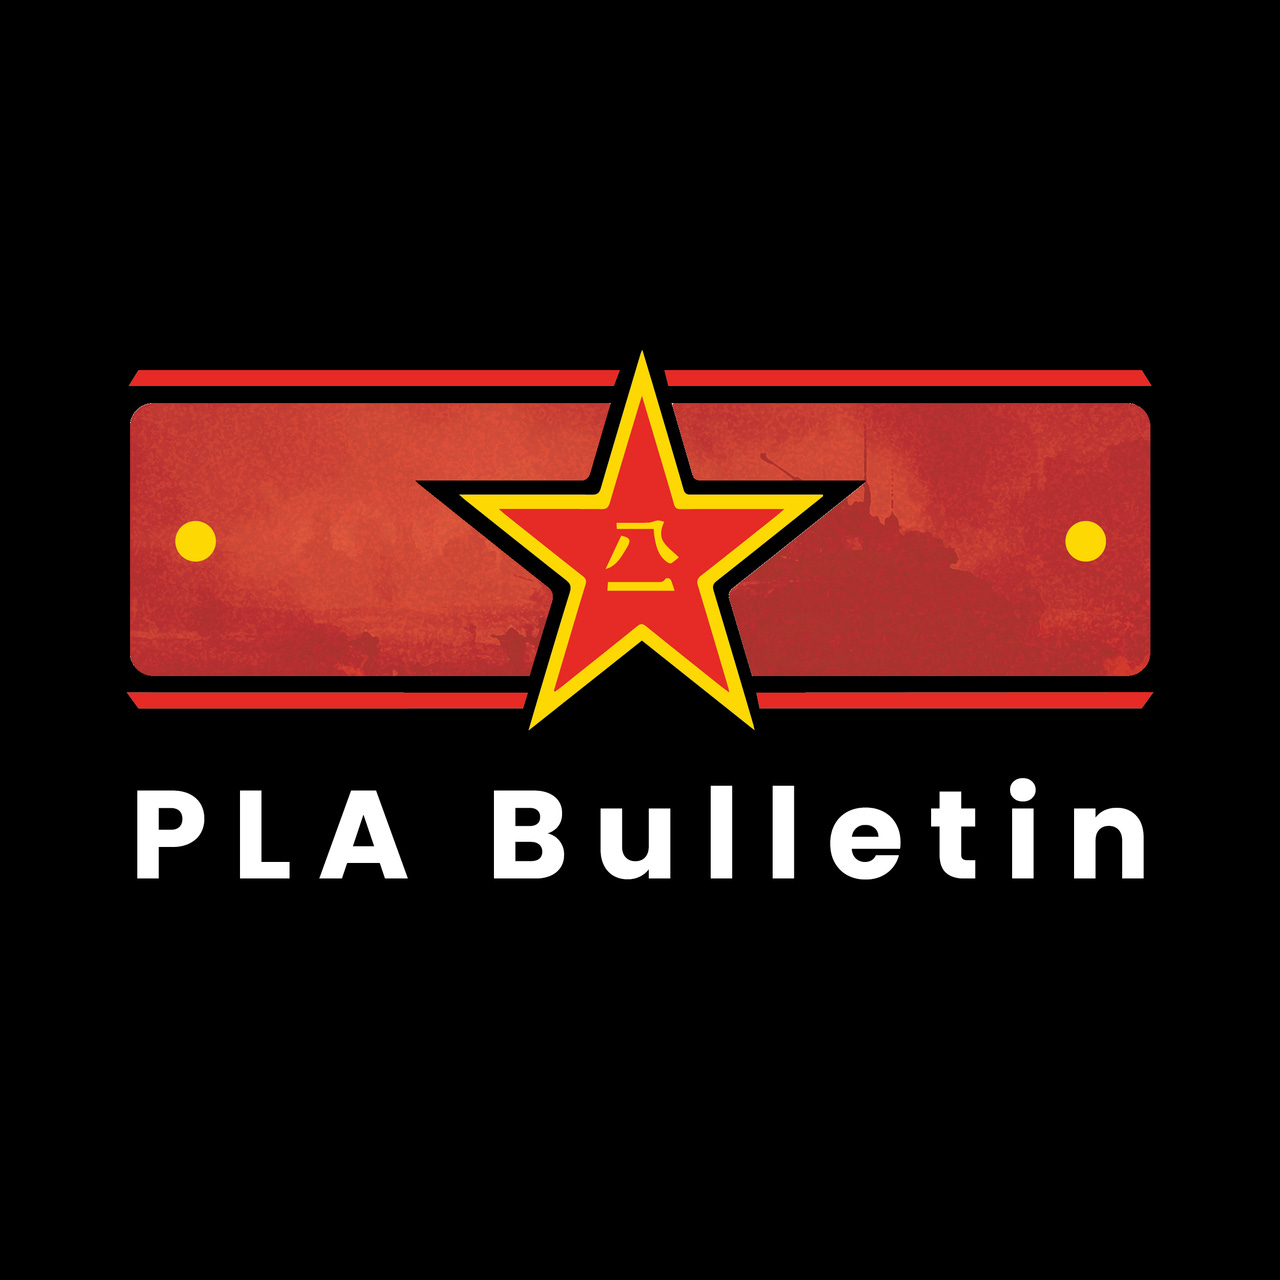 The PLA Bulletin